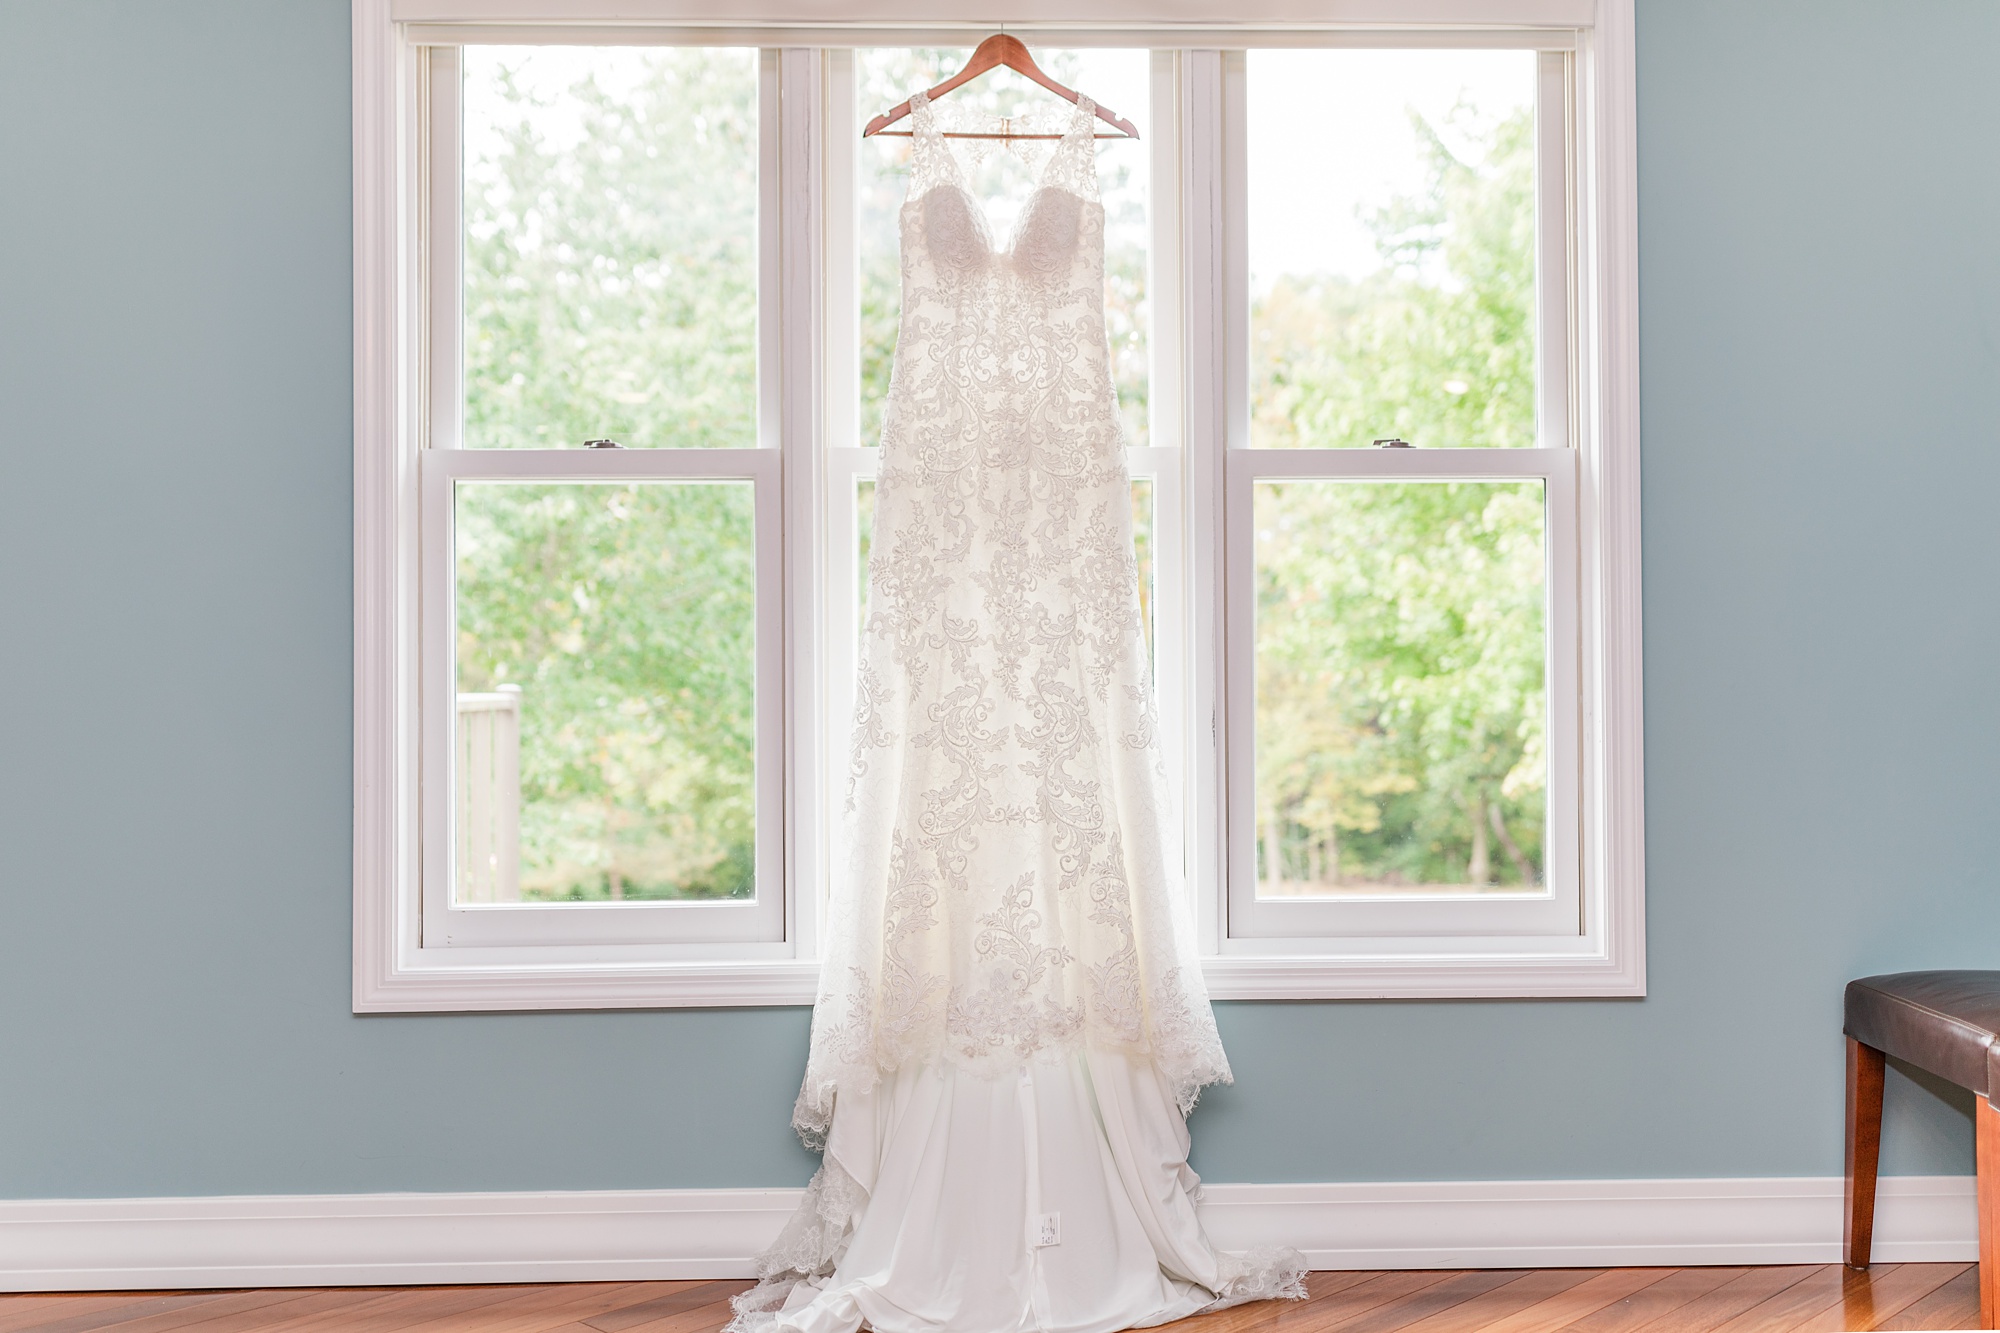 bride's dress hangs in window